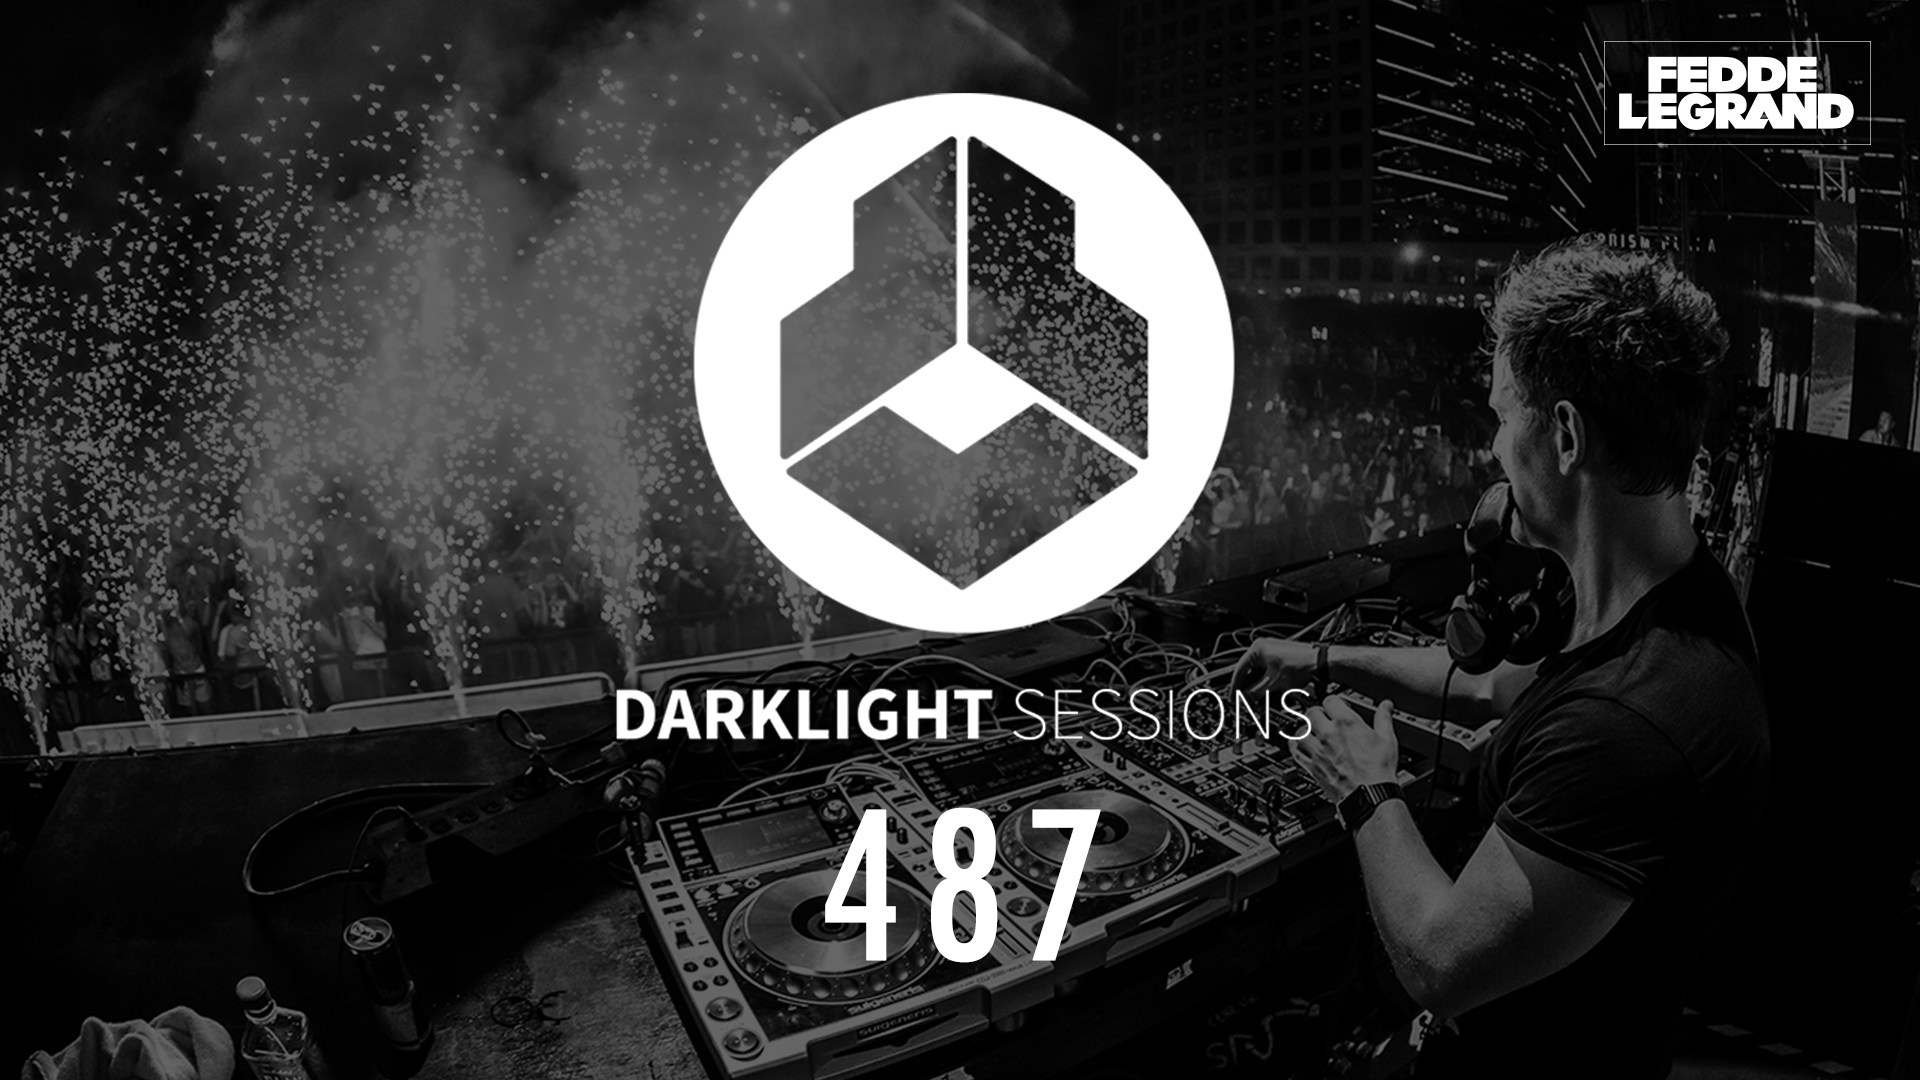 Darklight Sessions 487